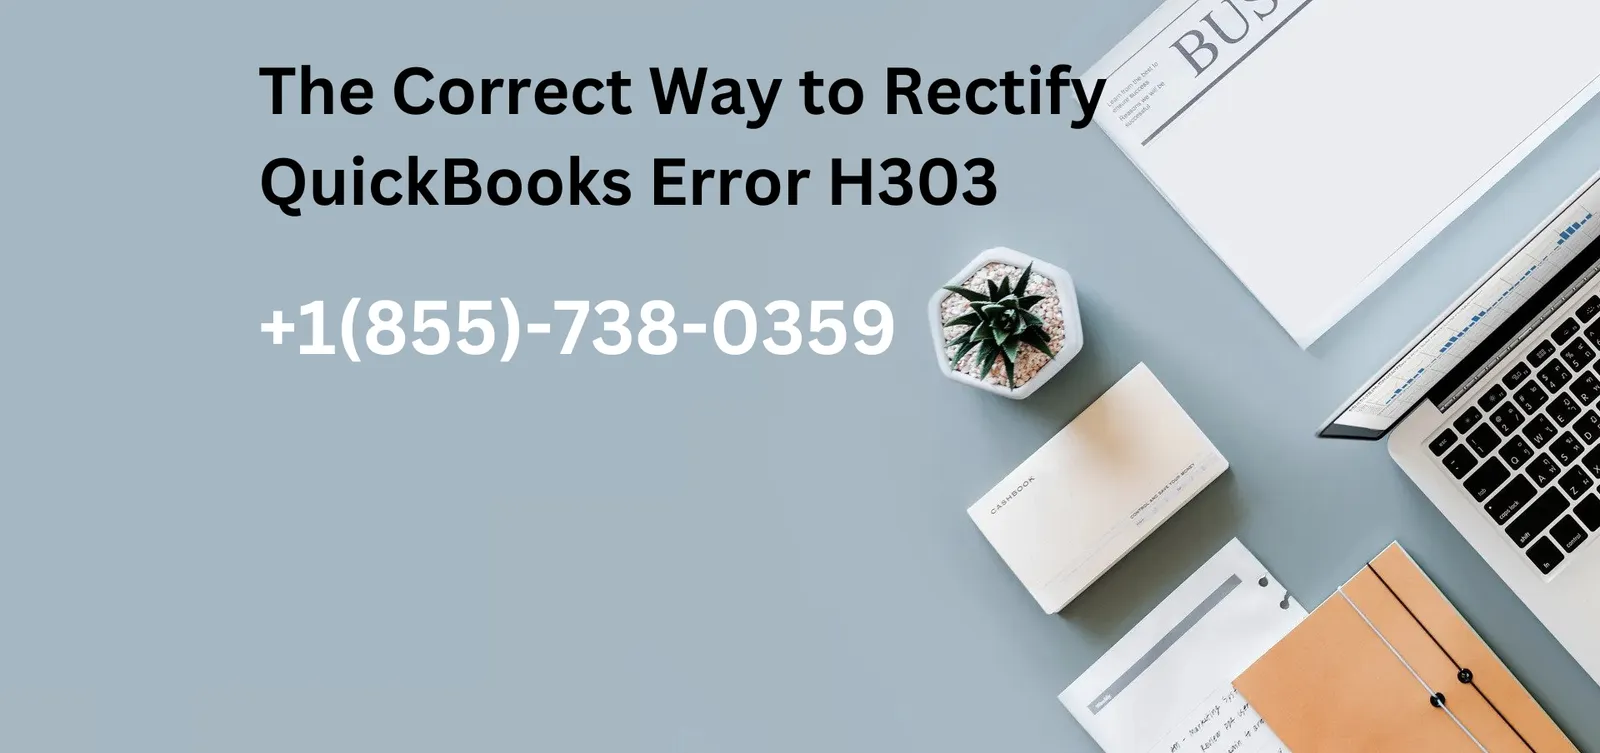 The Correct Way to Rectify QuickBooks Error H303